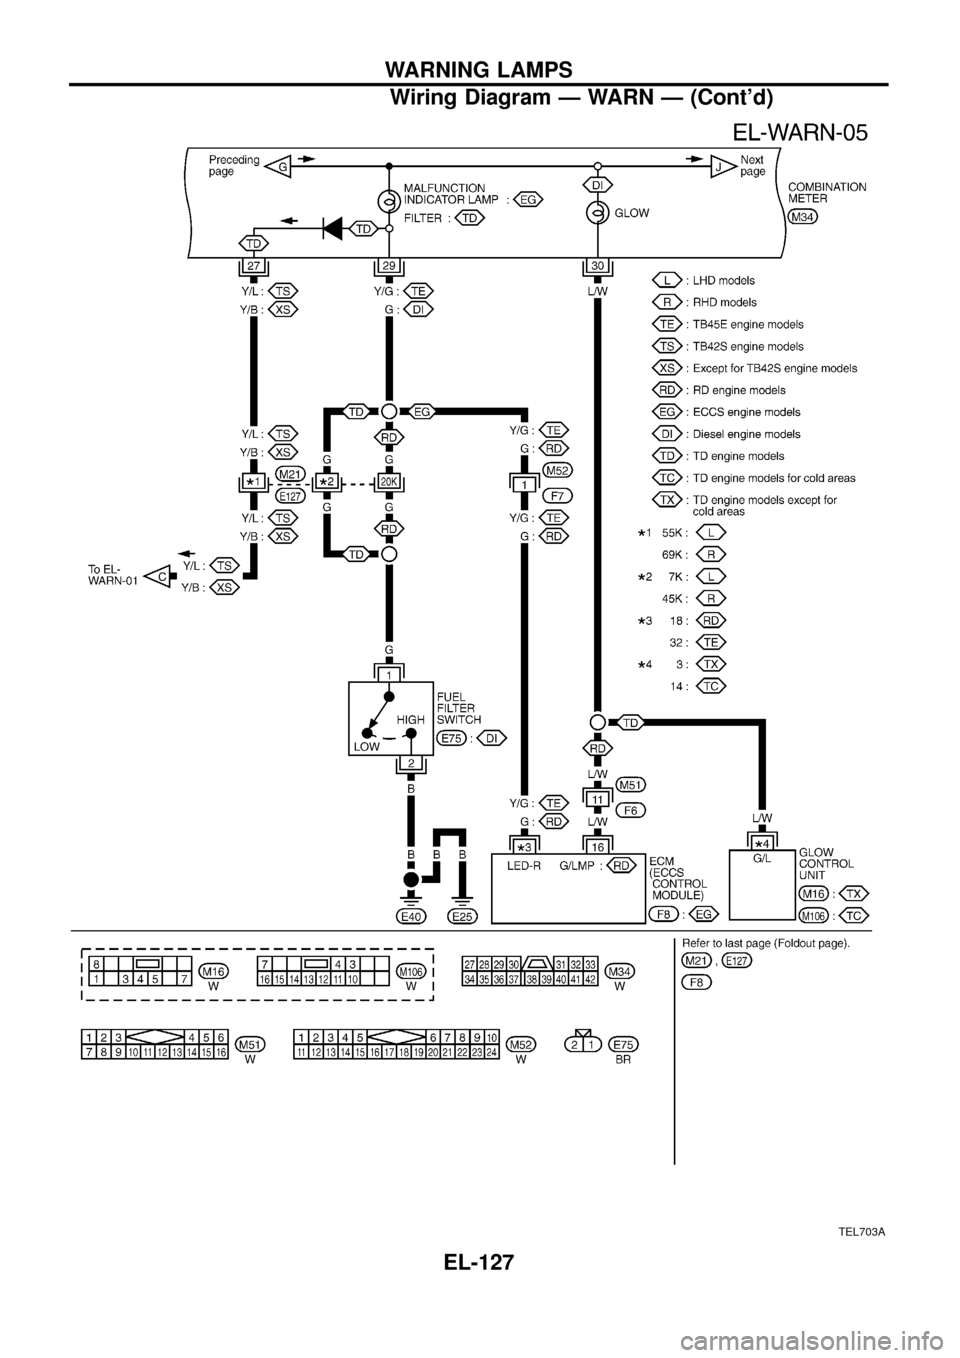 NISSAN PATROL 1998 Y61 / 5.G Electrical System User Guide TEL703A
WARNING LAMPS
Wiring Diagram Ð WARN Ð (Contd)
EL-127 